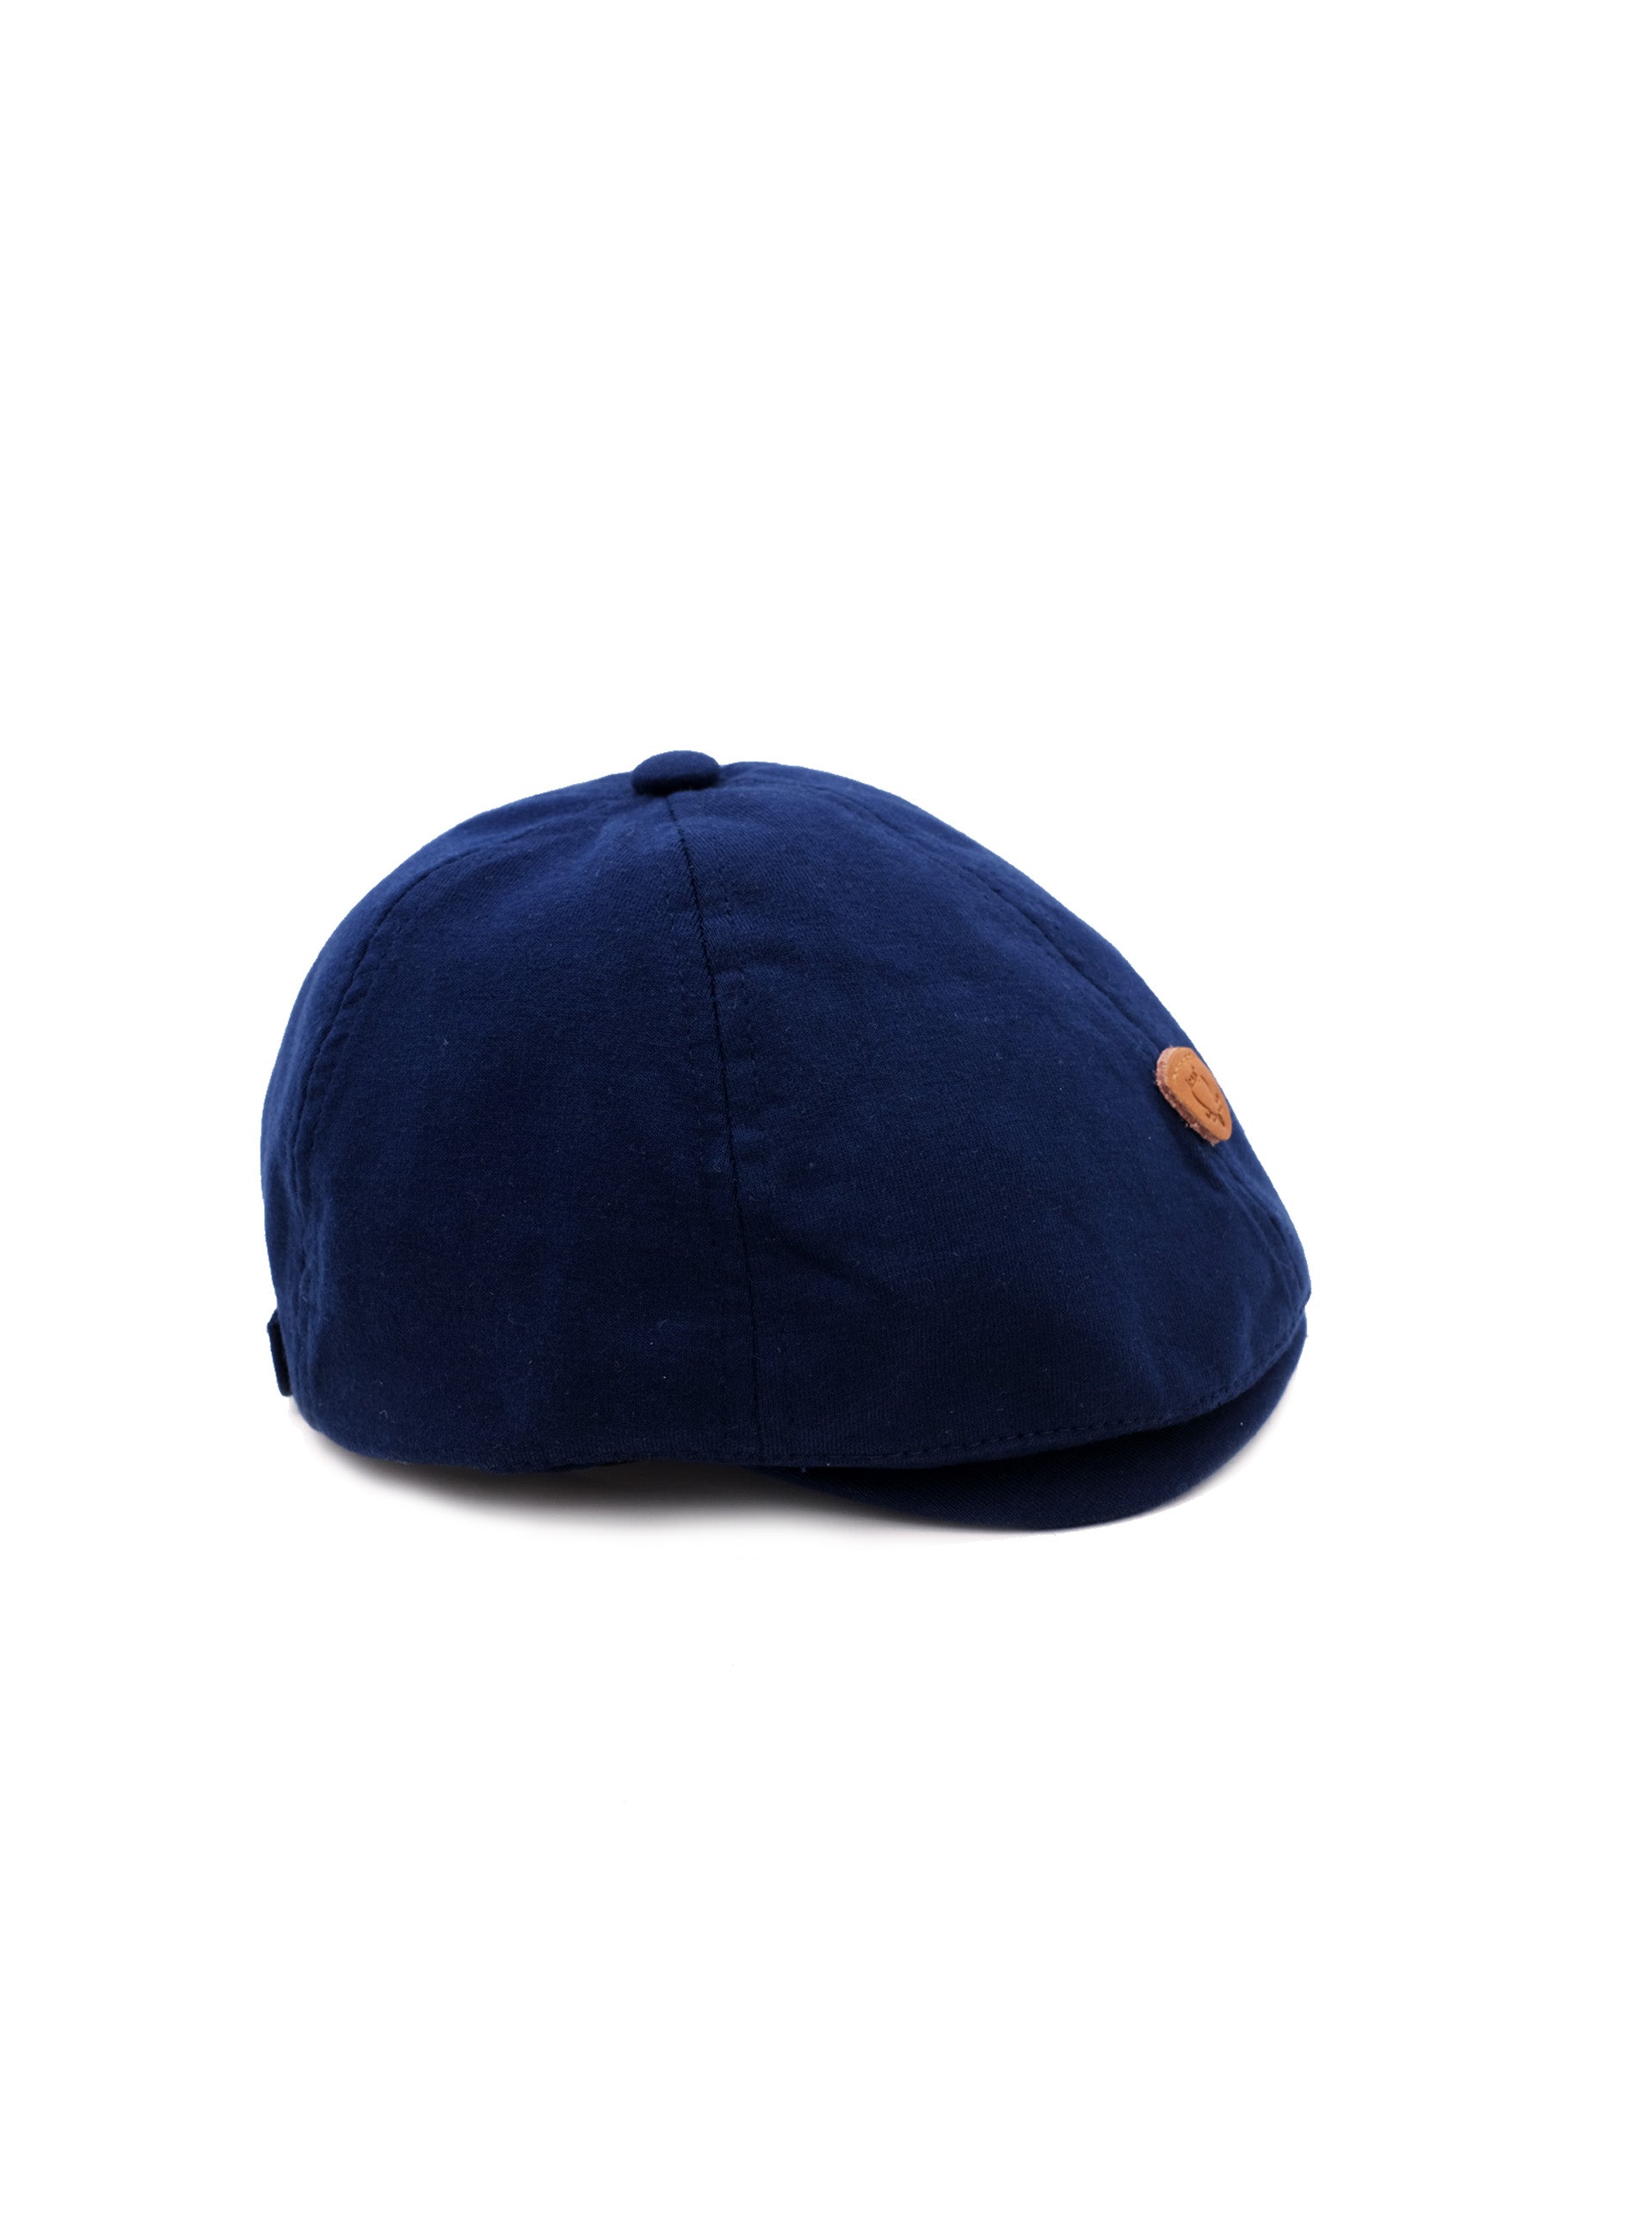 indigo blue beret with adjustable strap